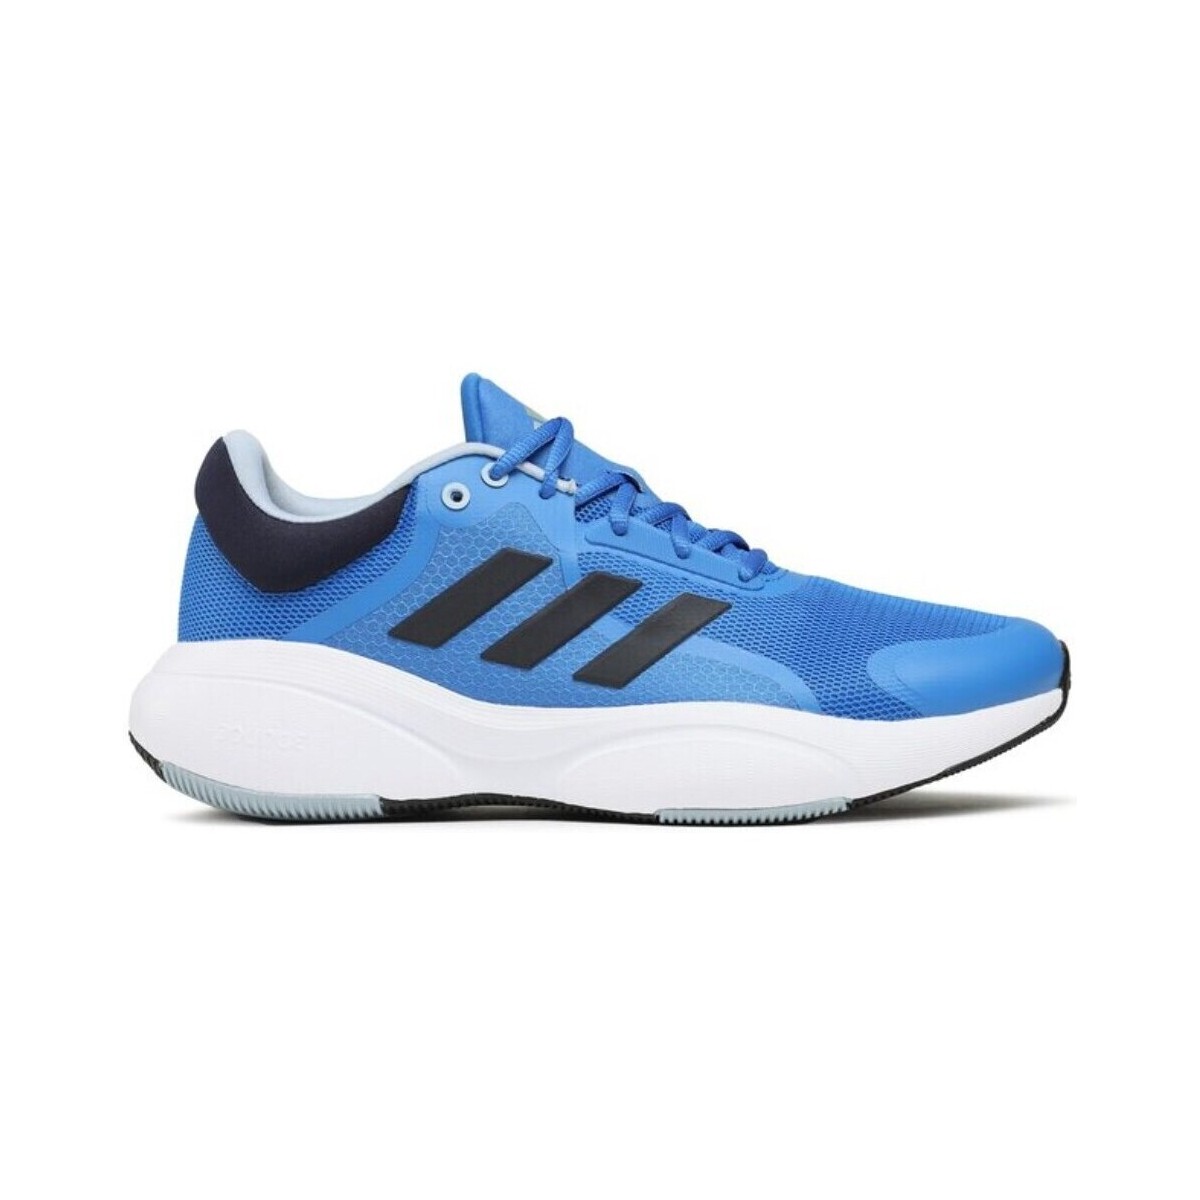 Adidas Response Shoes Blue